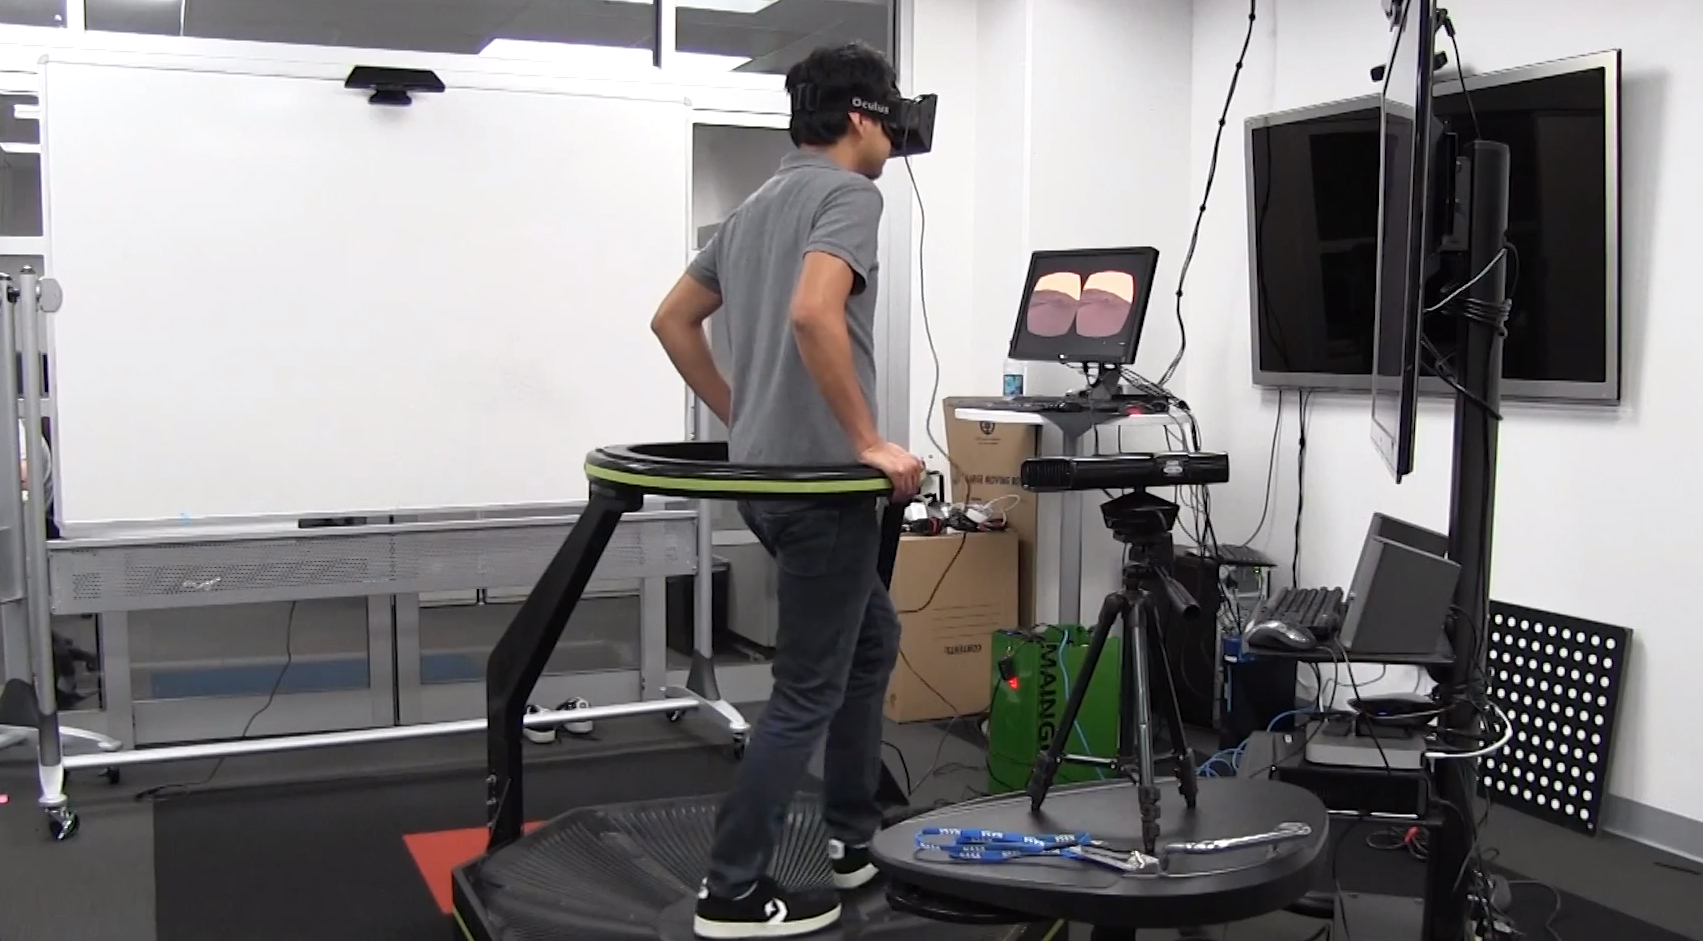 oculus-rift-omni-treadmill-mars-nasa.jpg